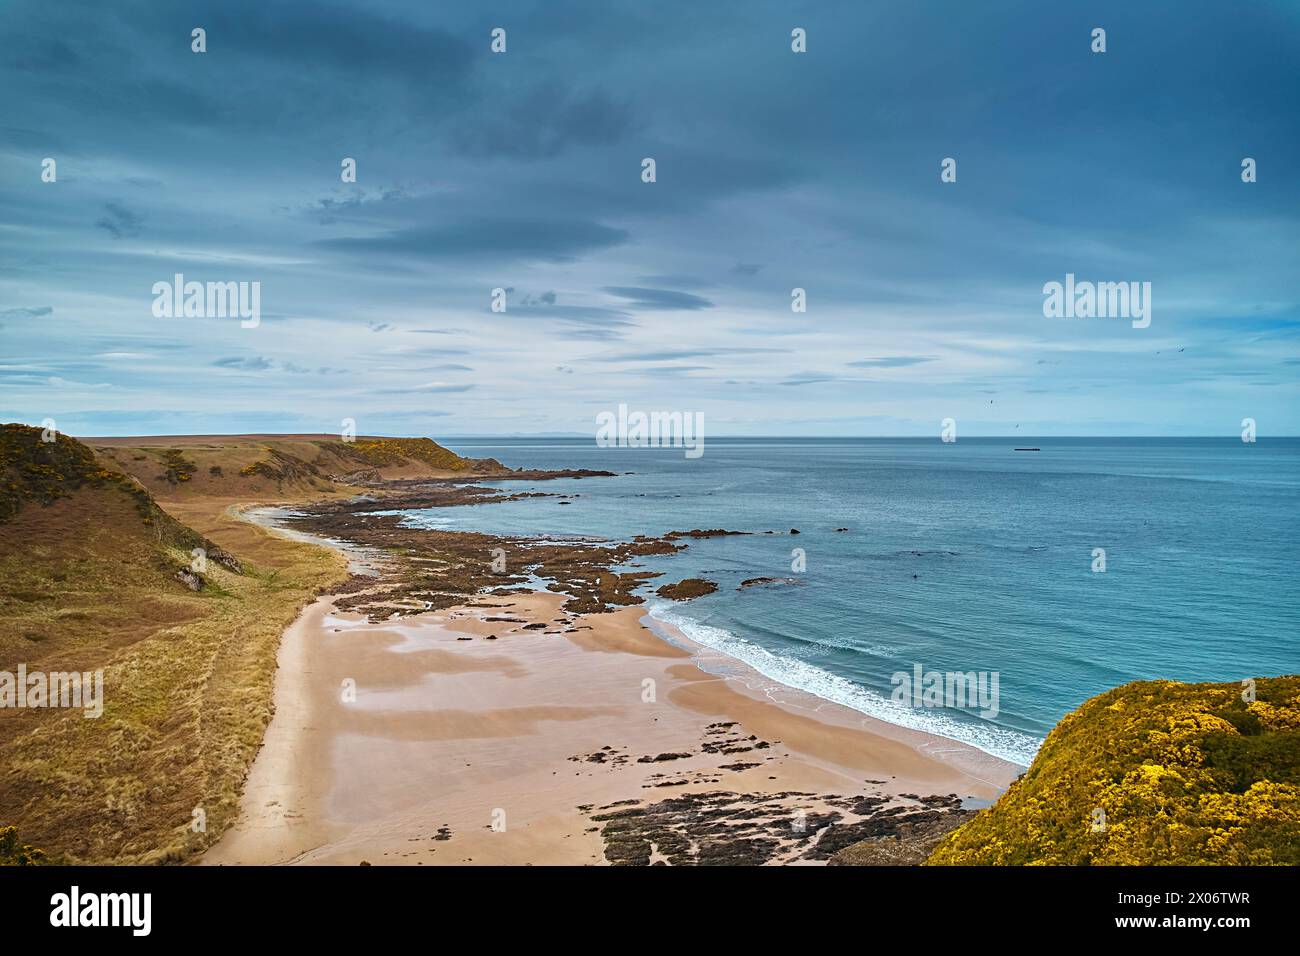 Sunnyside Beach Cullen Scotland sandy beach with rocks and the Moray Firth with a calm sea Stock Photo